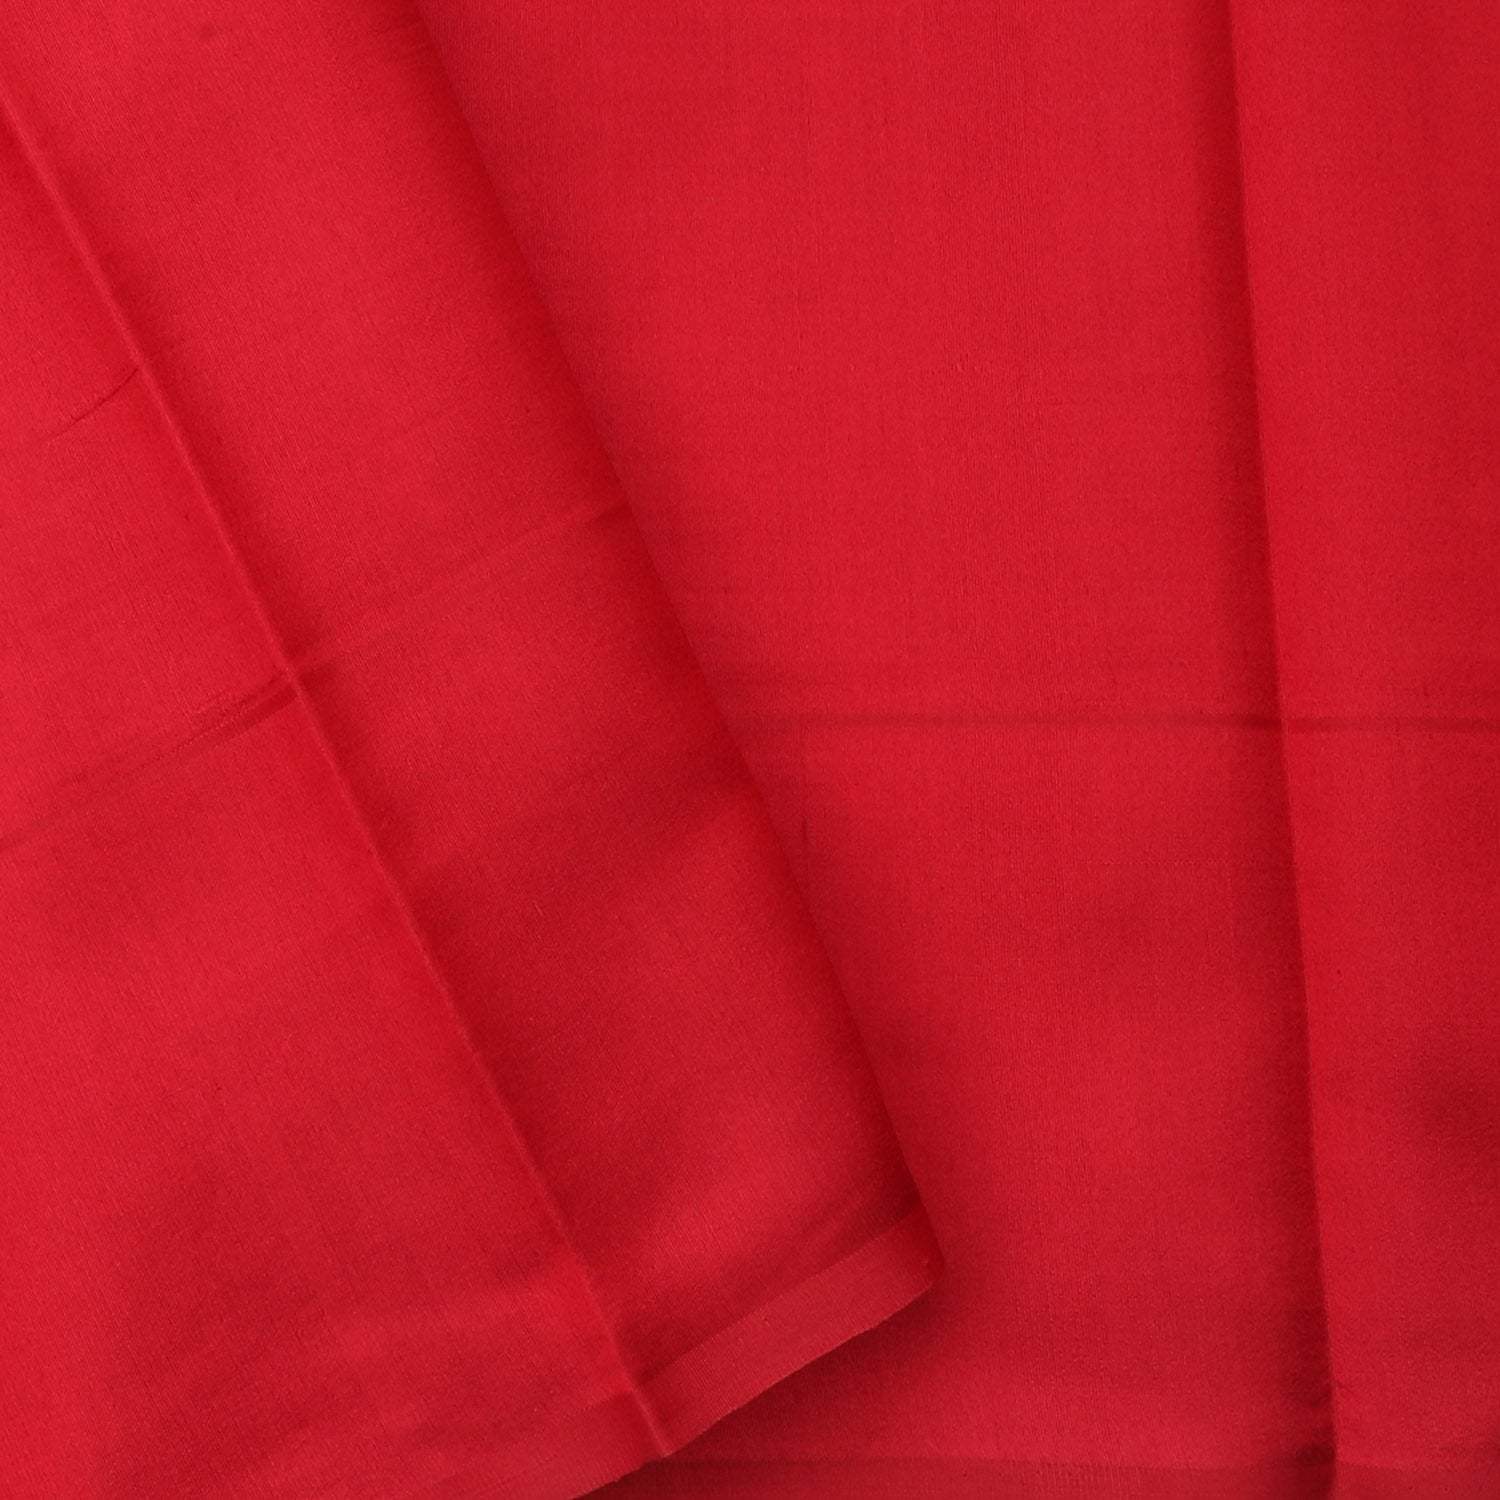 Burgundy Red Matka Silk Saree With Checks Pattern - Singhania's